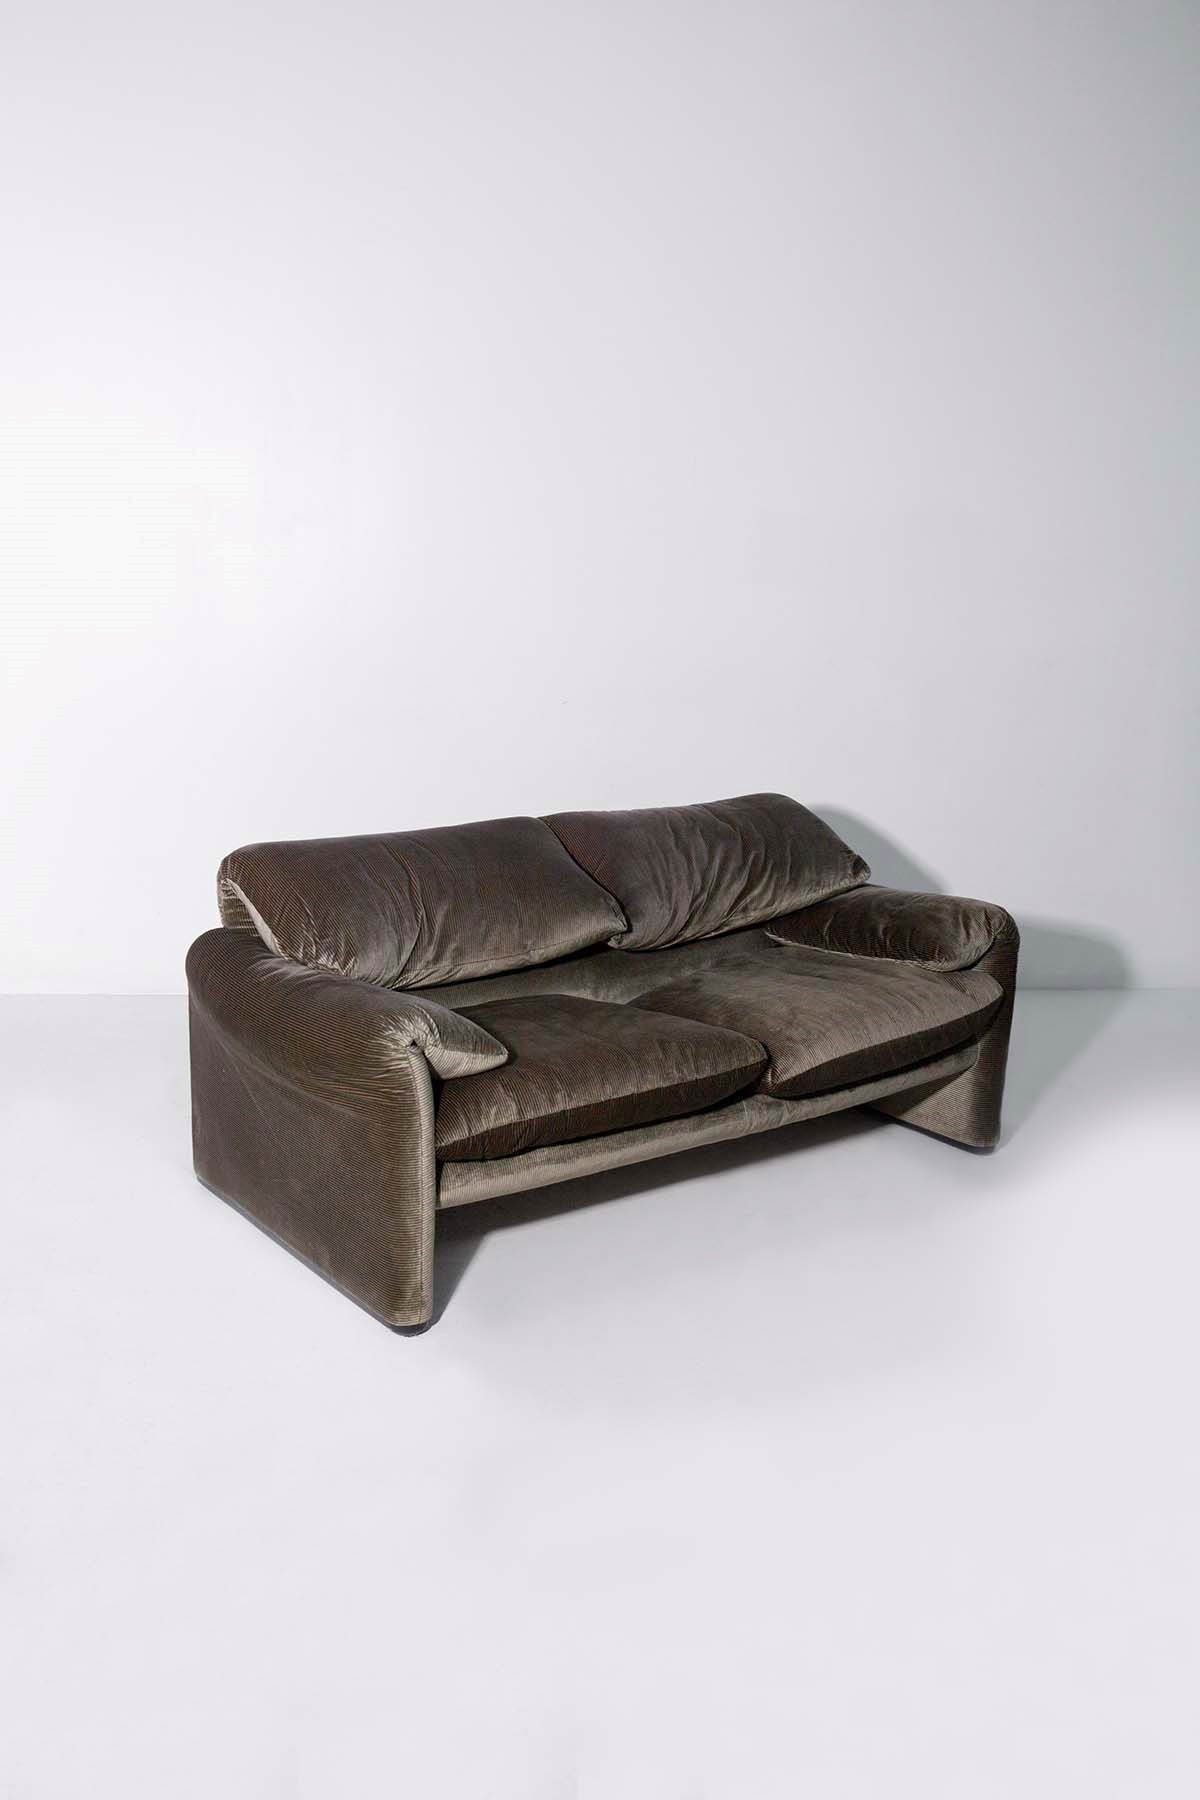 Vico Magistretti : Maralunga two-seater sofa  - Auction Top Design - LTWID Auction House